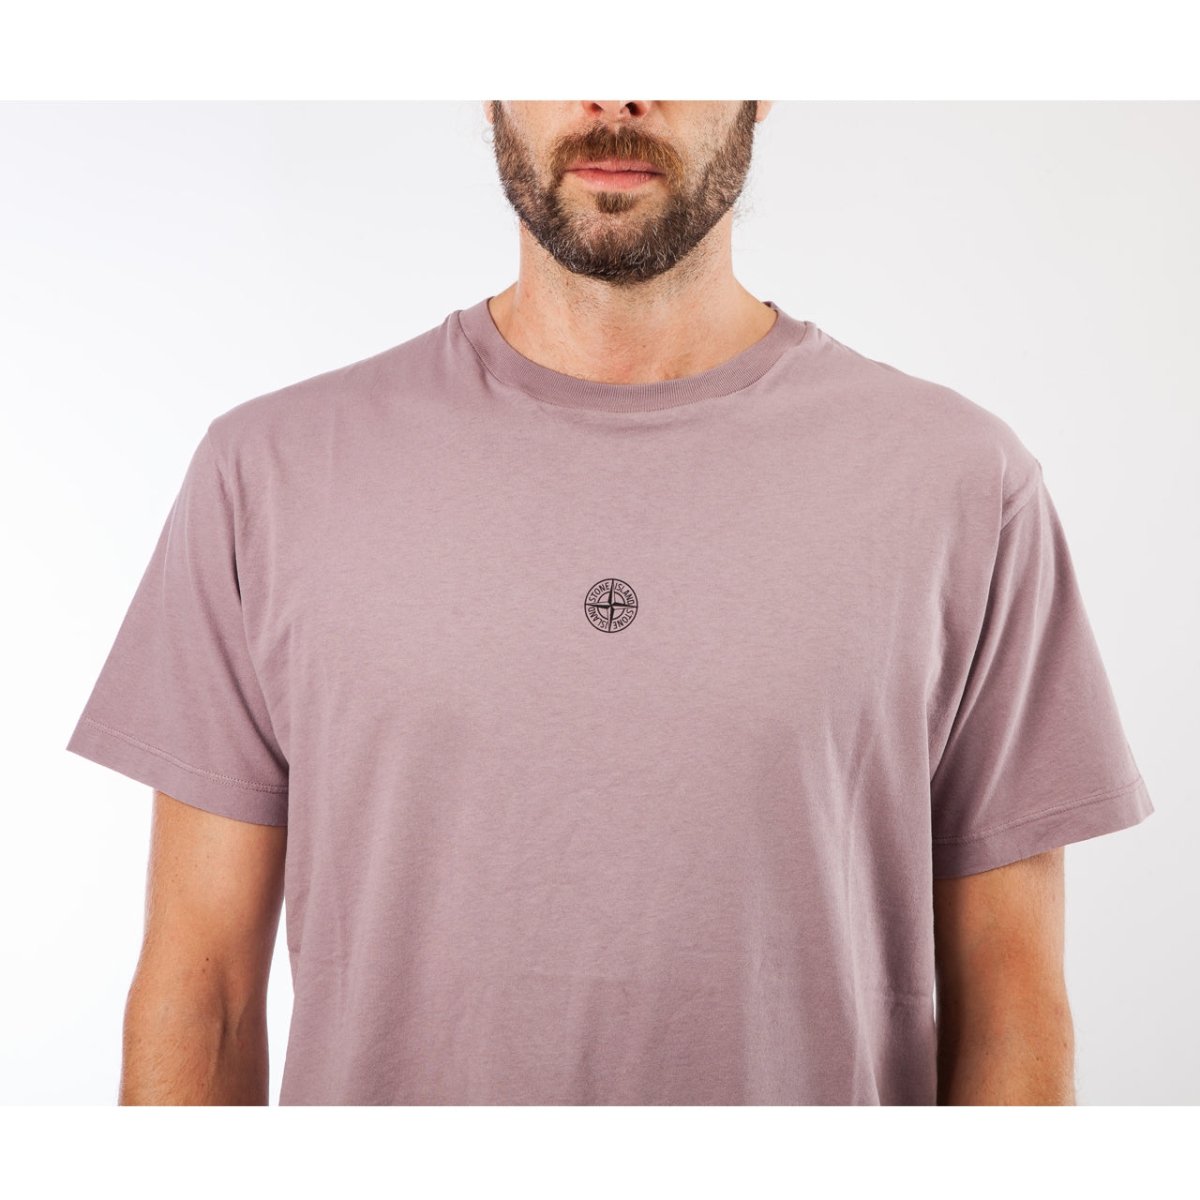 Stone Island T-Shirt (Rosa)  - Allike Store